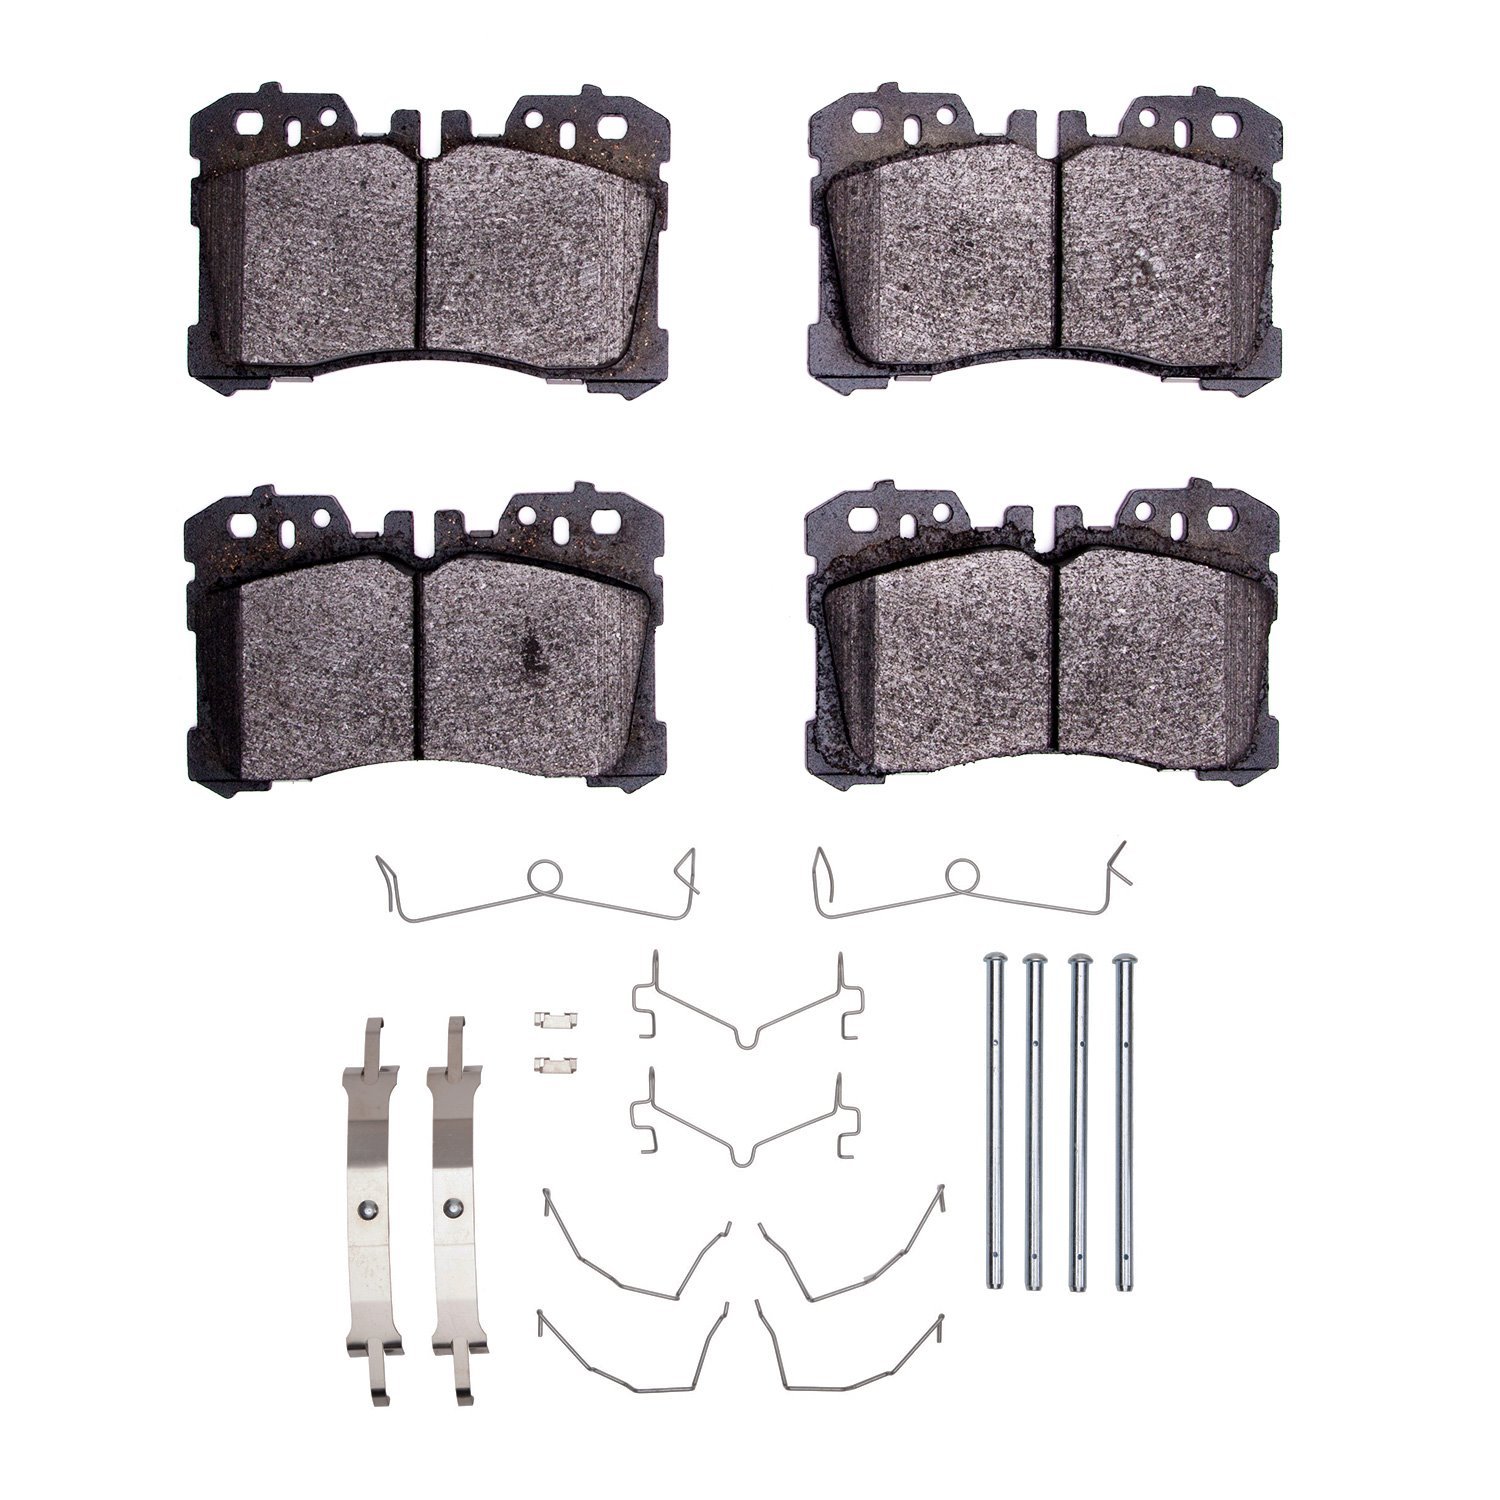 1600-1282-01 5000 Euro Ceramic Brake Pads & Hardware Kit, Fits Select Lexus/Toyota/Scion, Position: Front